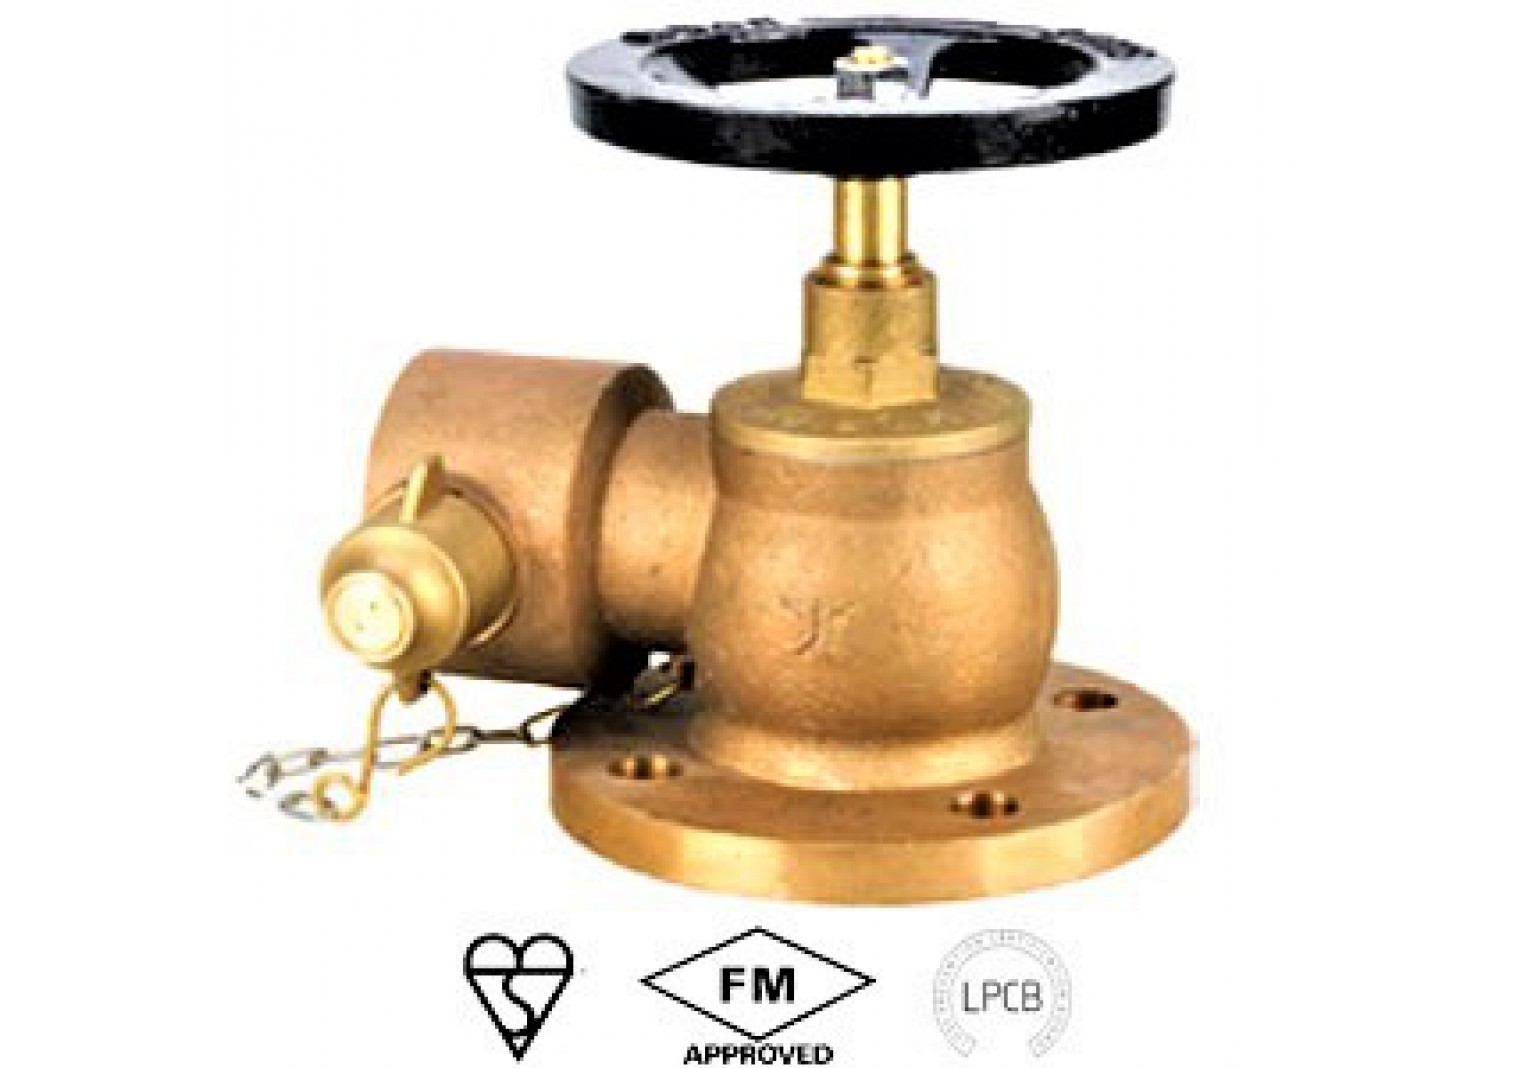 Landing valve F25-50 (No FM)